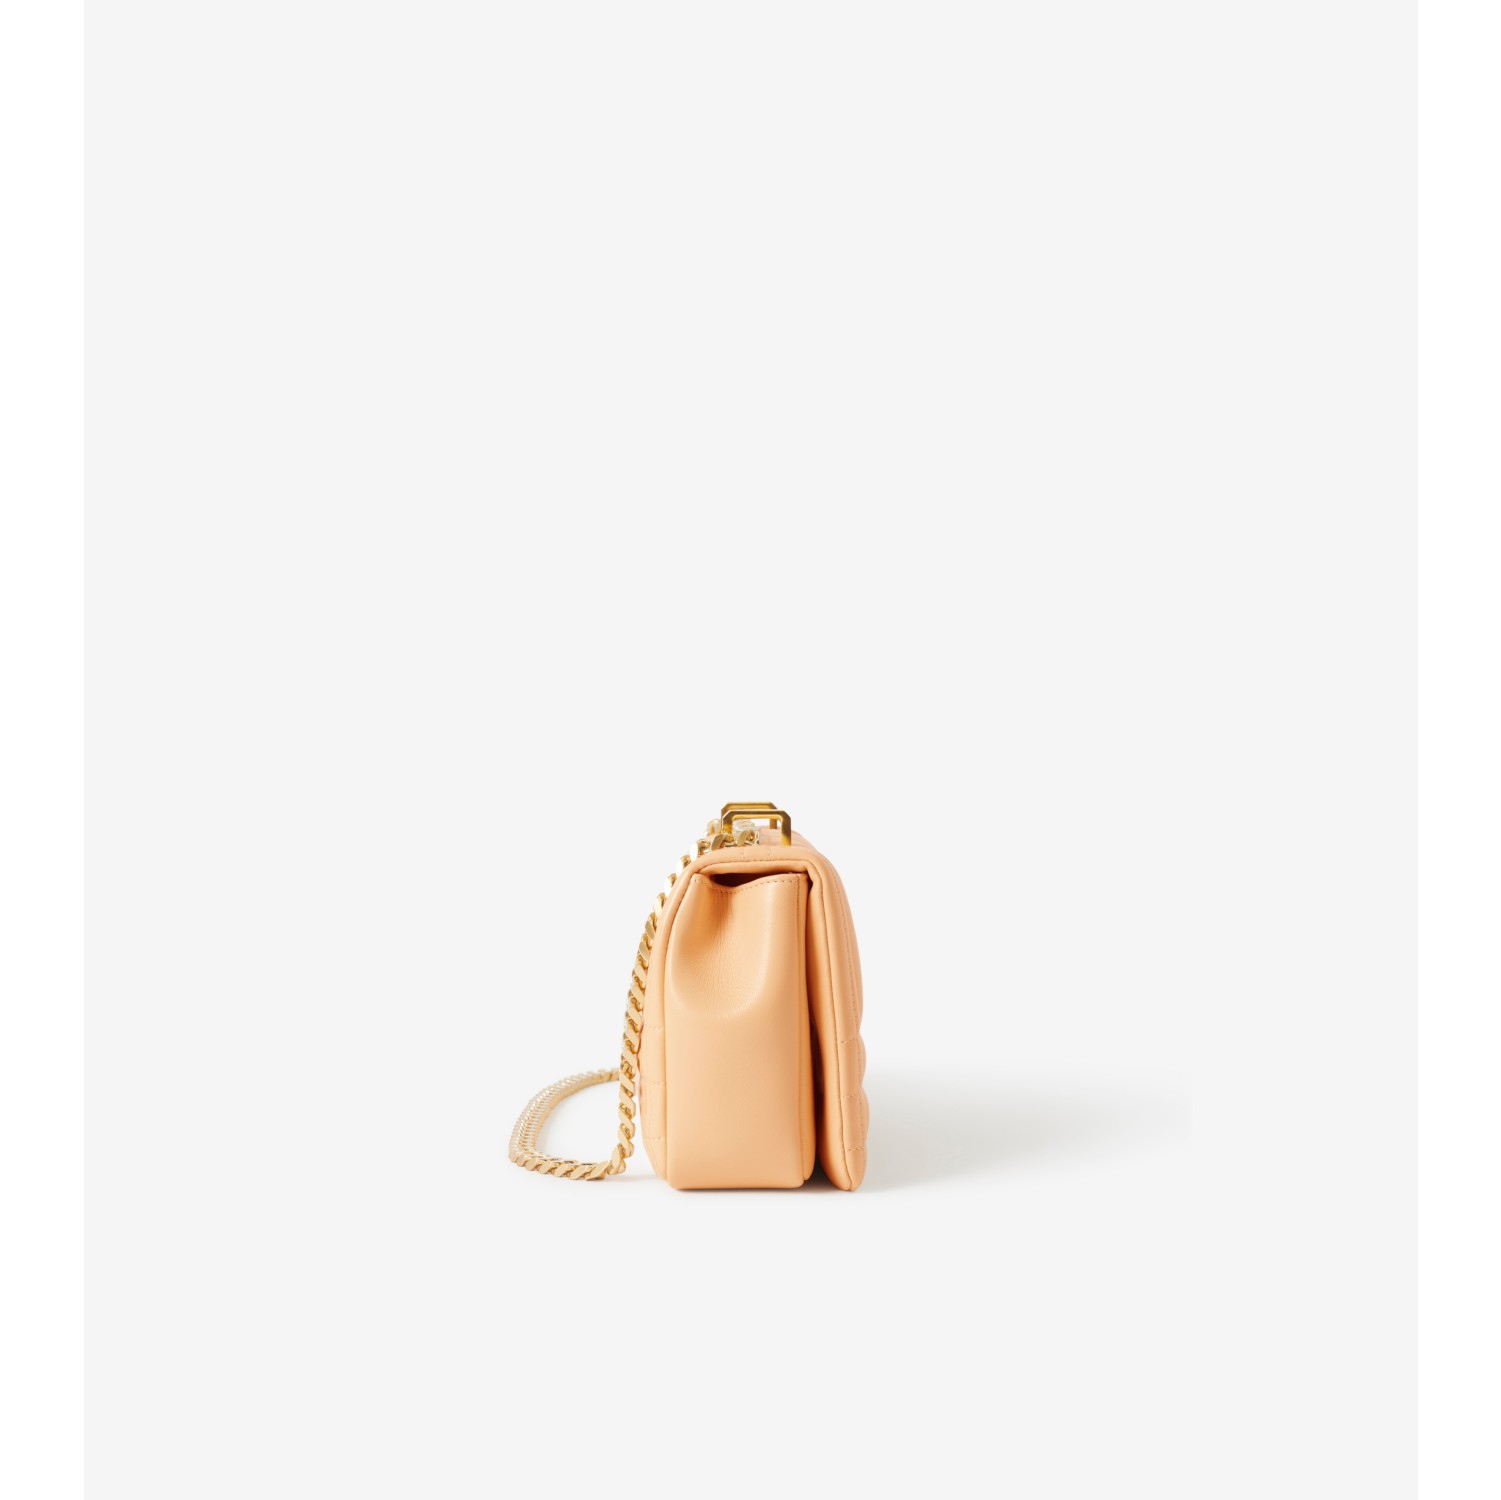 Burberry Mini Lola Bucket Bag